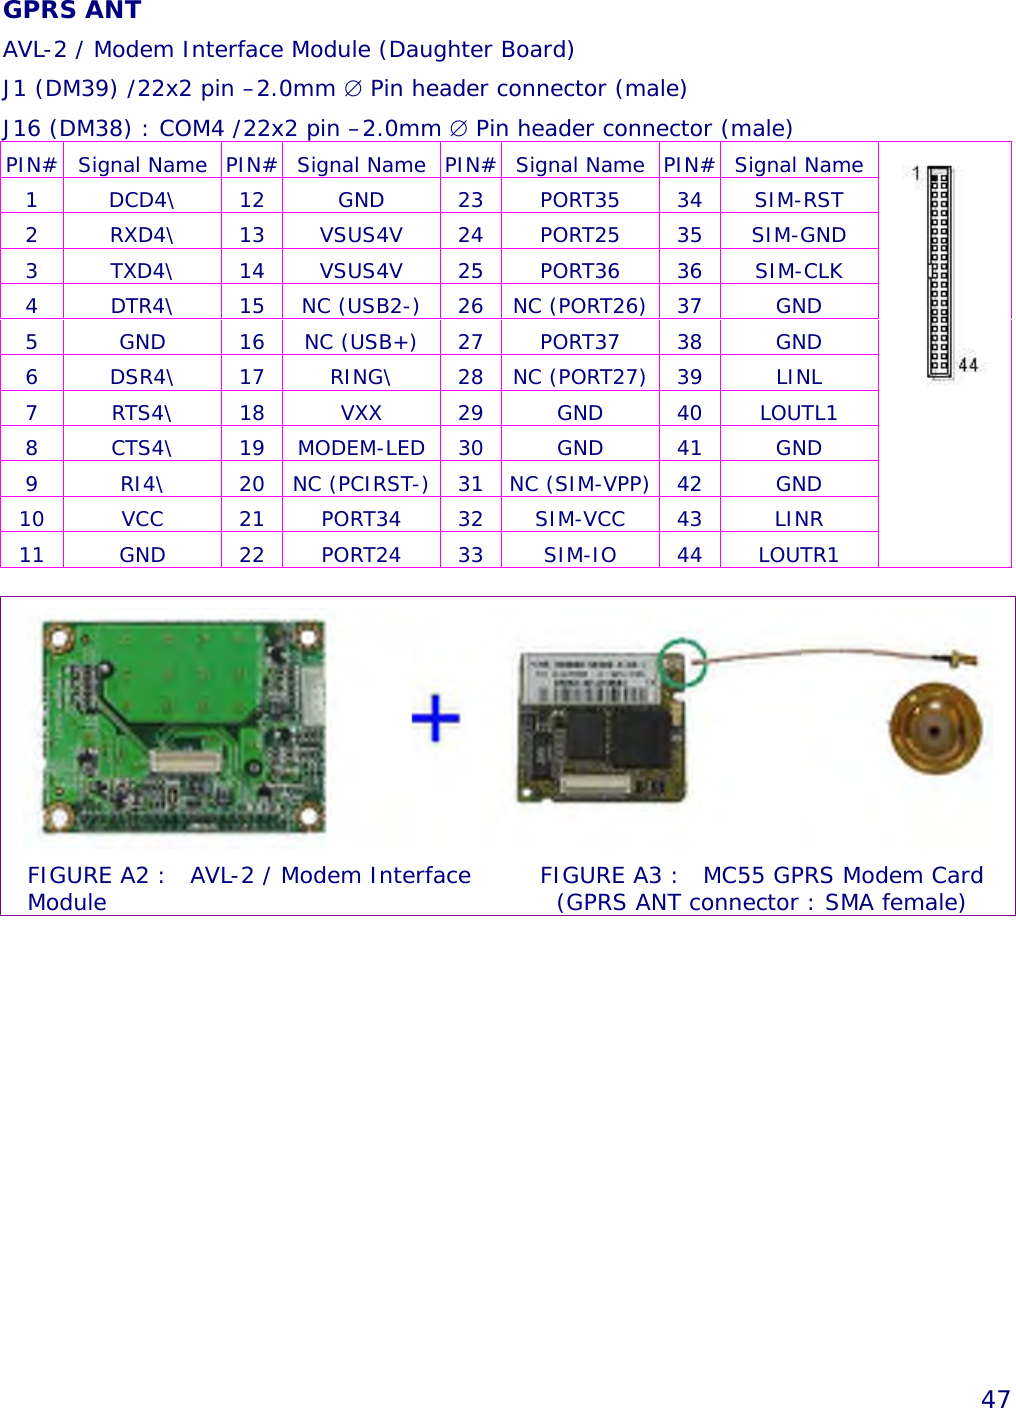   47 GPRS ANT AVL-2 / Modem Interface Module (Daughter Board) J1 (DM39) /22x2 pin –2.0mm ∅ Pin header connector (male) J16 (DM38) : COM4 /22x2 pin –2.0mm ∅ Pin header connector (male) PIN# Signal Name  PIN# Signal Name  PIN# Signal Name  PIN# Signal Name 1  DCD4\  12  GND  23 PORT35 34 SIM-RST 2  RXD4\  13 VSUS4V 24 PORT25 35 SIM-GND 3  TXD4\  14 VSUS4V 25 PORT36 36 SIM-CLK 4  DTR4\  15 NC (USB2-) 26 NC (PORT26) 37  GND 5  GND  16 NC (USB+) 27  PORT37  38  GND 6  DSR4\ 17 RING\ 28 NC (PORT27) 39  LINL 7 RTS4\ 18 VXX 29 GND 40 LOUTL1 8  CTS4\  19 MODEM-LED 30  GND  41  GND 9  RI4\  20  NC (PCIRST-)  31  NC (SIM-VPP)  42  GND 10 VCC 21 PORT34 32 SIM-VCC 43 LINR 11 GND 22 PORT24 33 SIM-IO 44 LOUTR1      FIGURE A2 :  AVL-2 / Modem Interface Module  FIGURE A3 :  MC55 GPRS Modem Card (GPRS ANT connector : SMA female)  